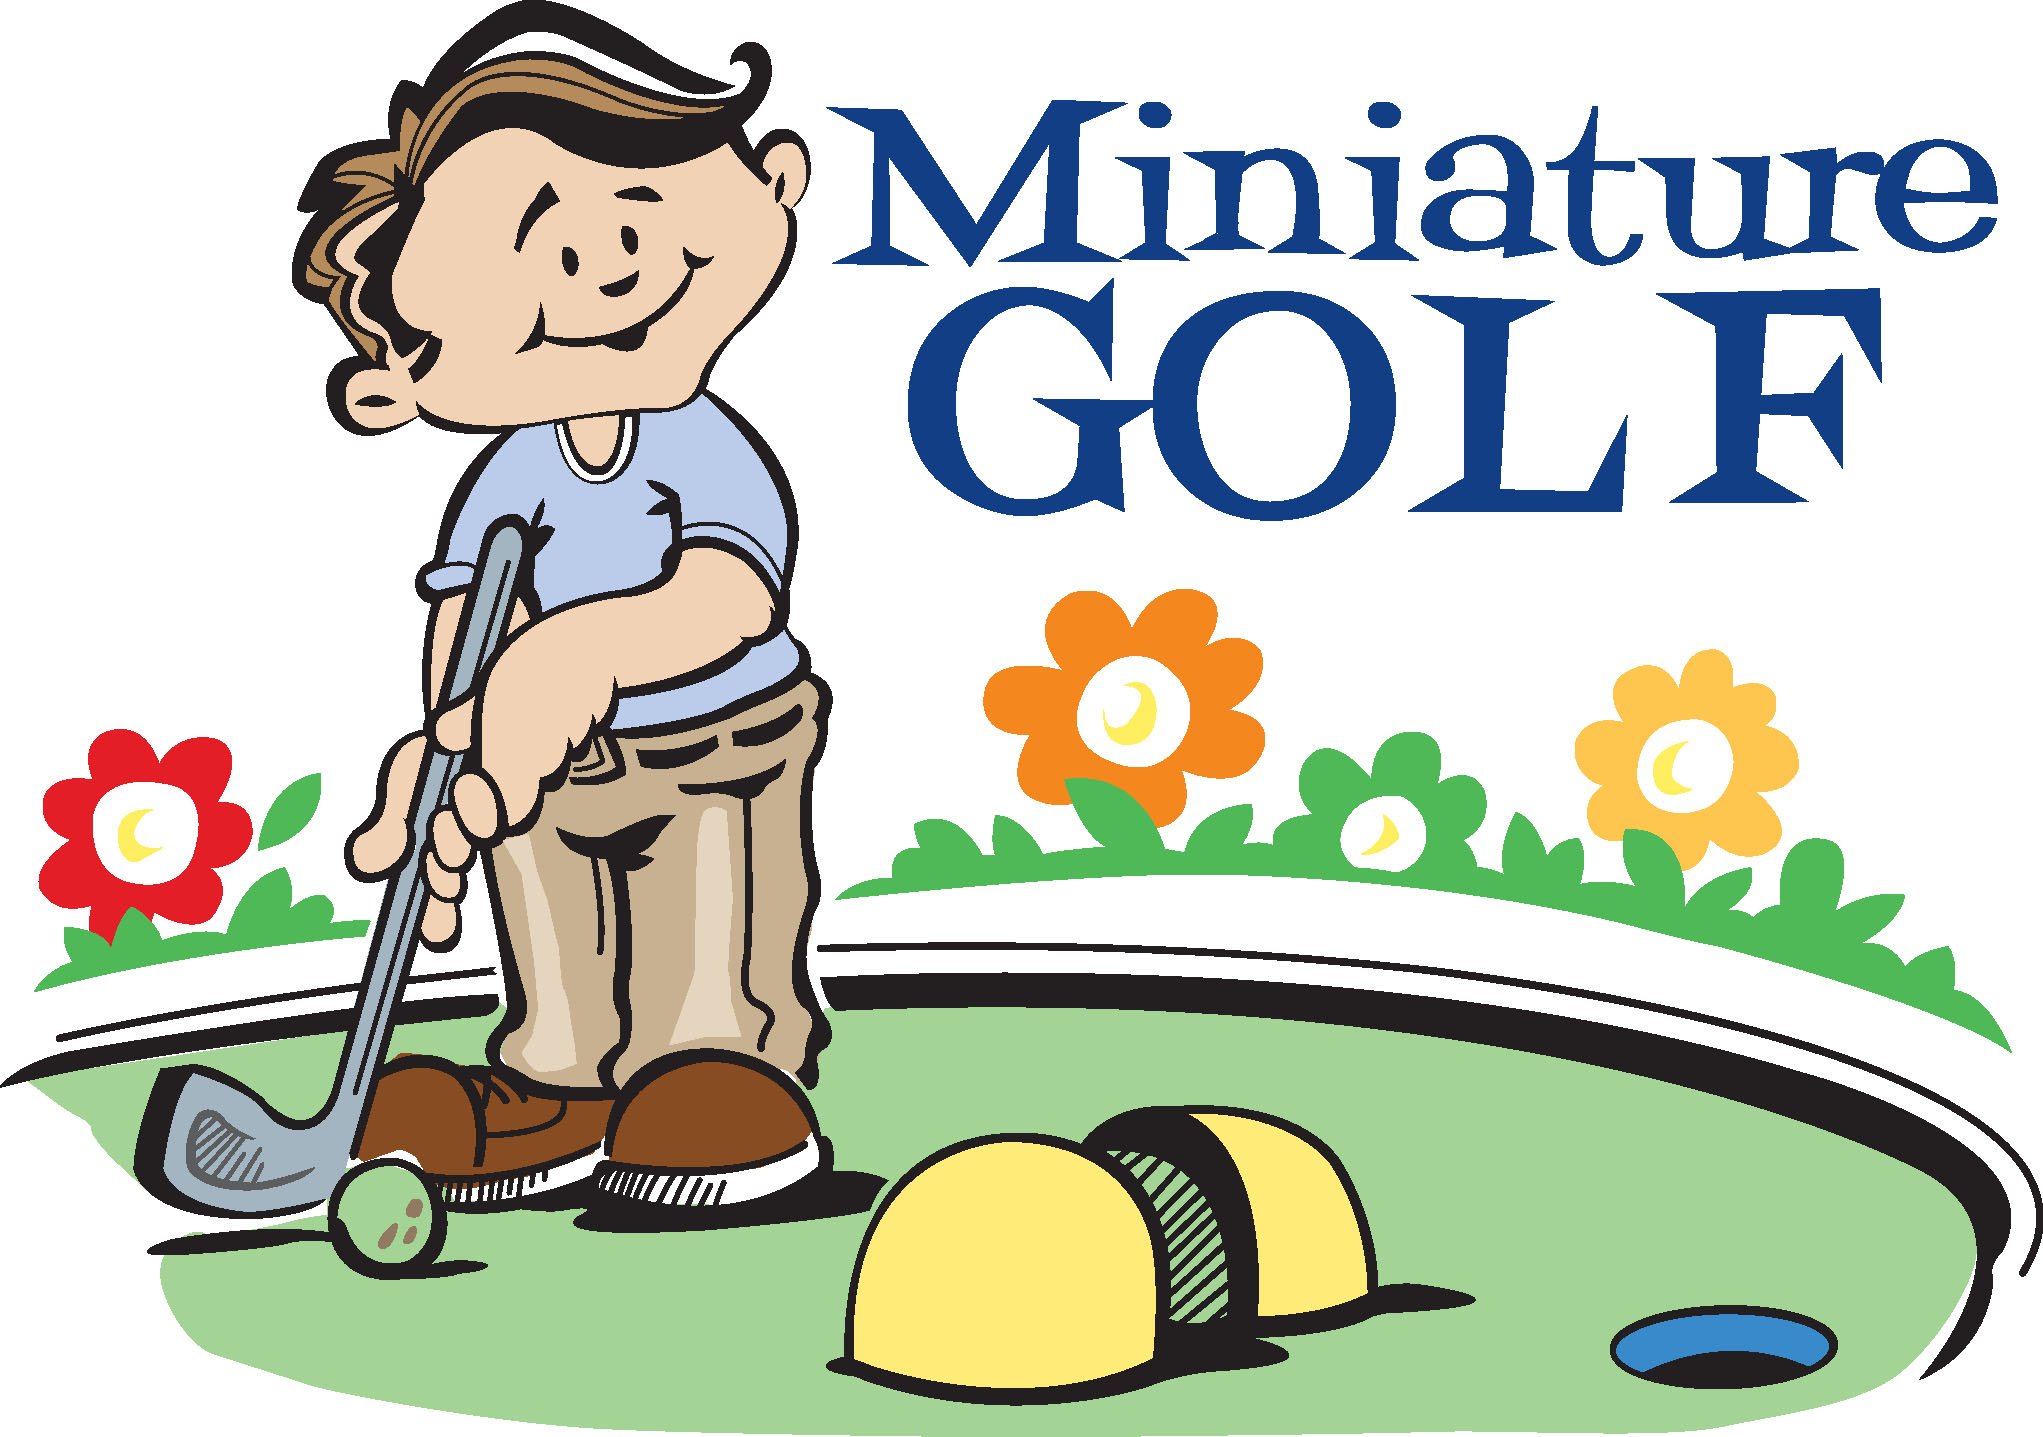 miniture golf.jpg